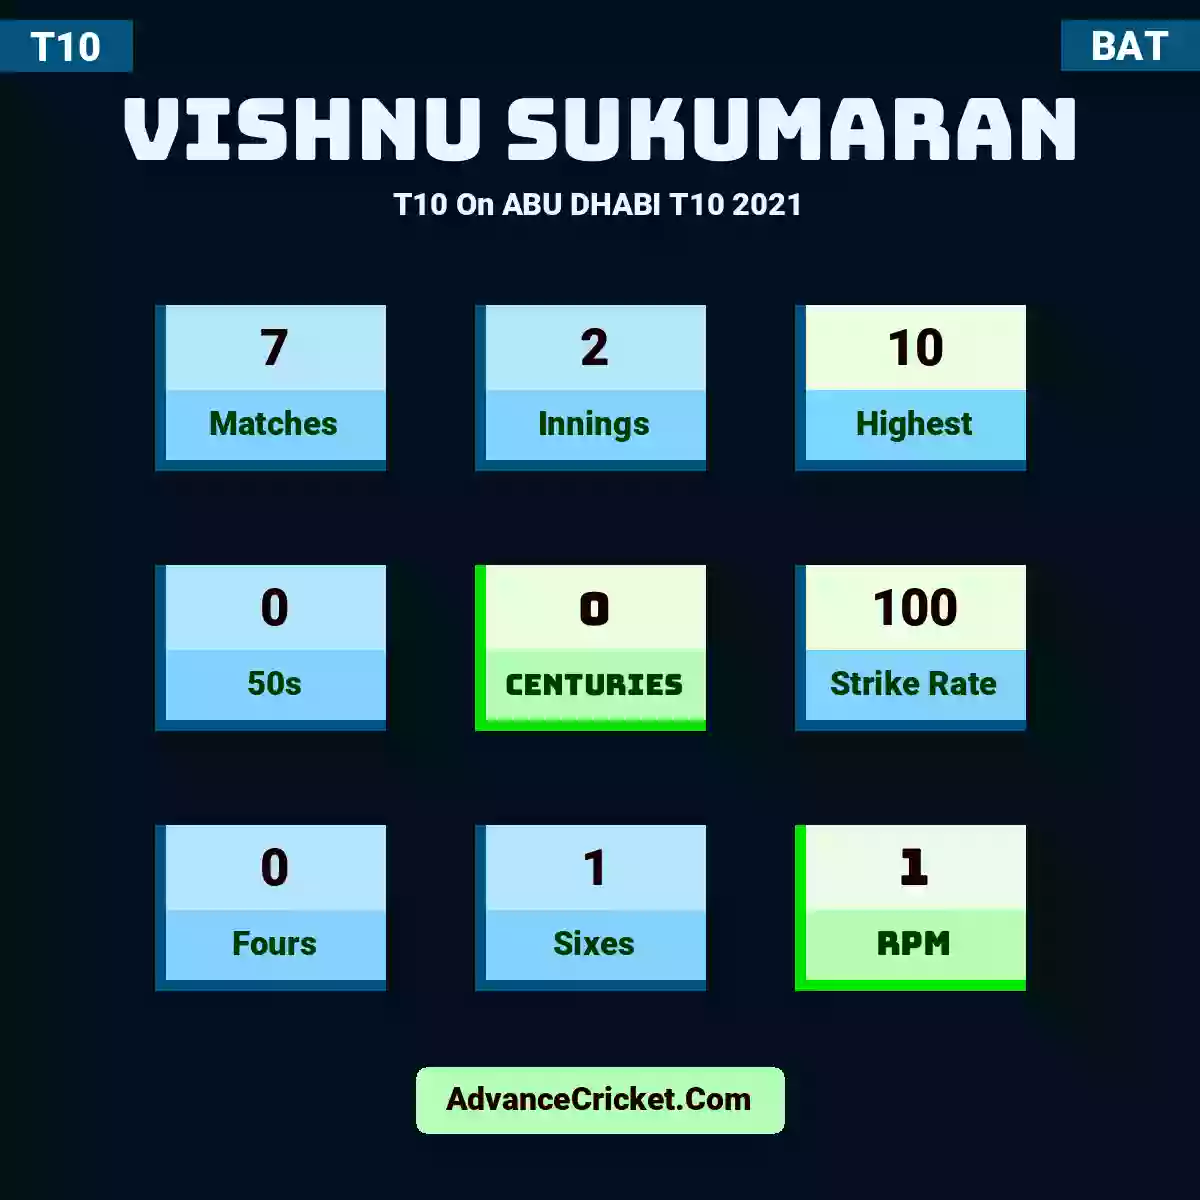 Vishnu Sukumaran T10  On ABU DHABI T10 2021, Vishnu Sukumaran played 7 matches, scored 10 runs as highest, 0 half-centuries, and 0 centuries, with a strike rate of 100. V.Sukumaran hit 0 fours and 1 sixes, with an RPM of 1.